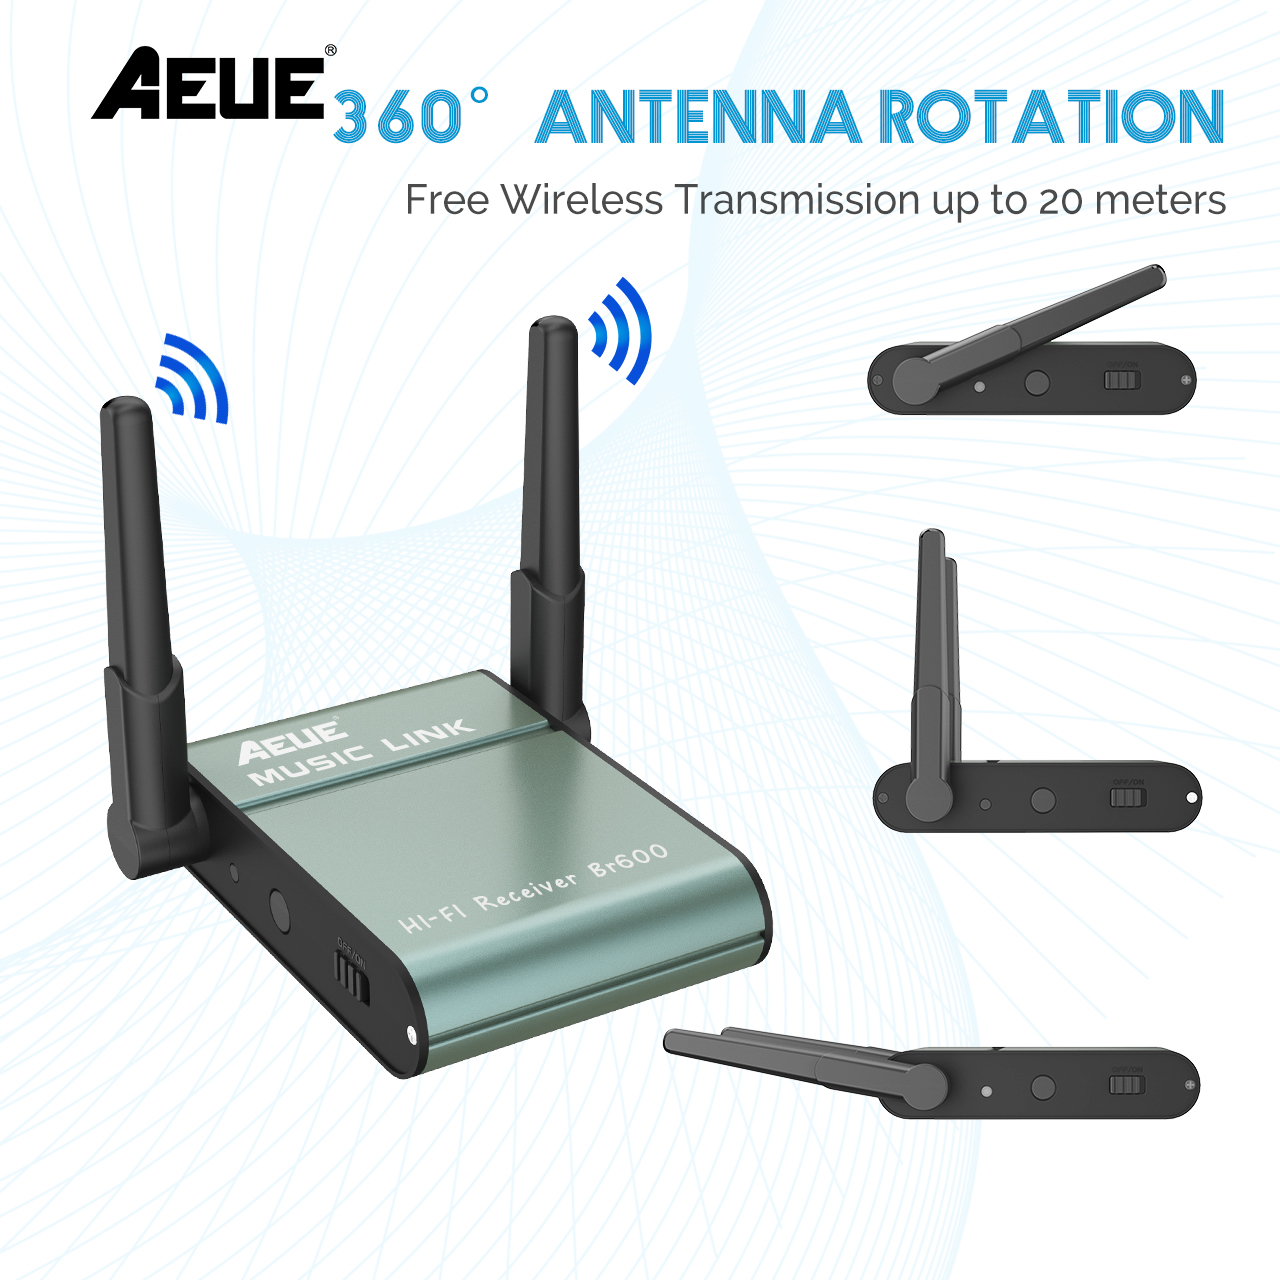 AEUE BR600 Bluetooth อุปกรณ์รับสัญญาณบลูทูธ Wireless Audio Receiver Sound เบสแน่น เสียงดี รับสัญญาณมากกว่า 20 เมตร